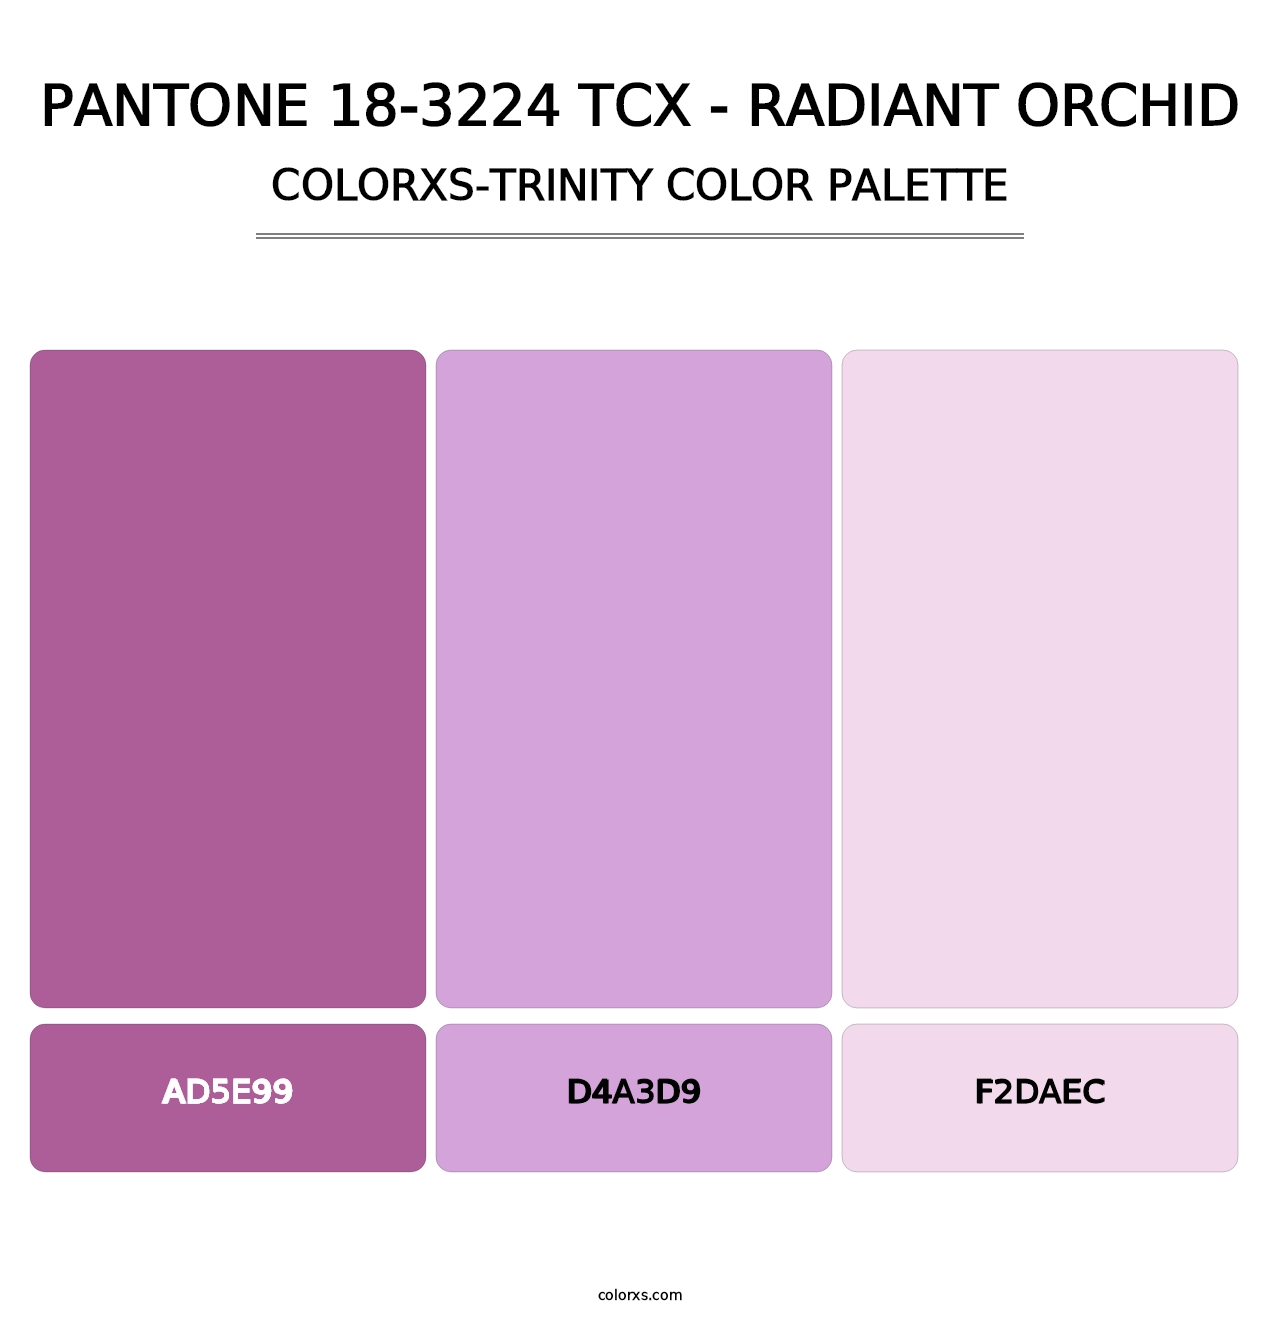 PANTONE 18-3224 TCX - Radiant Orchid - Colorxs Trinity Palette